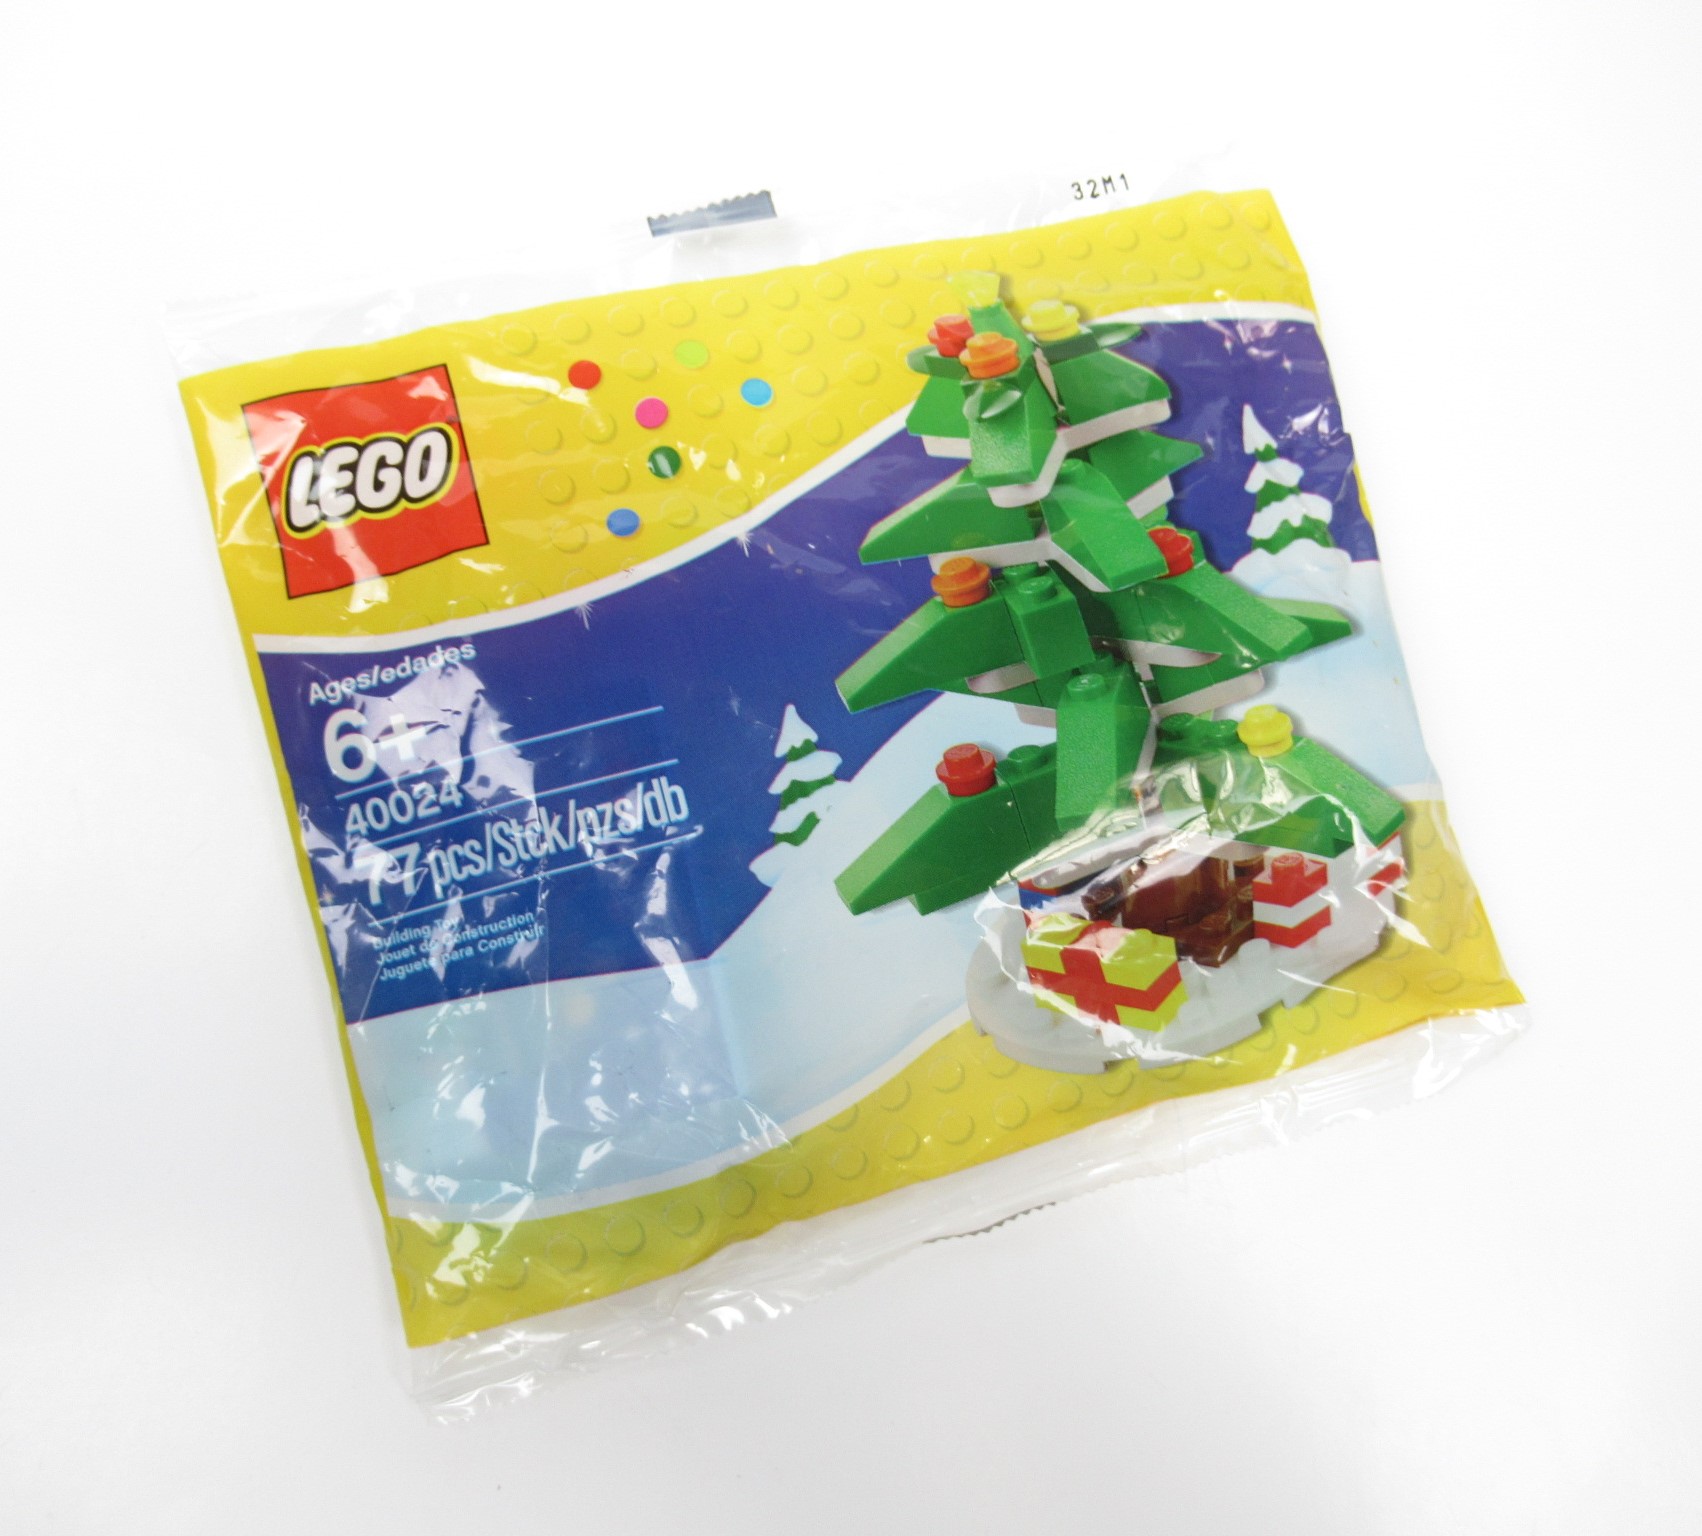 Slika za LEGO Creator - 40024 Weihnachtsbaum Polybag